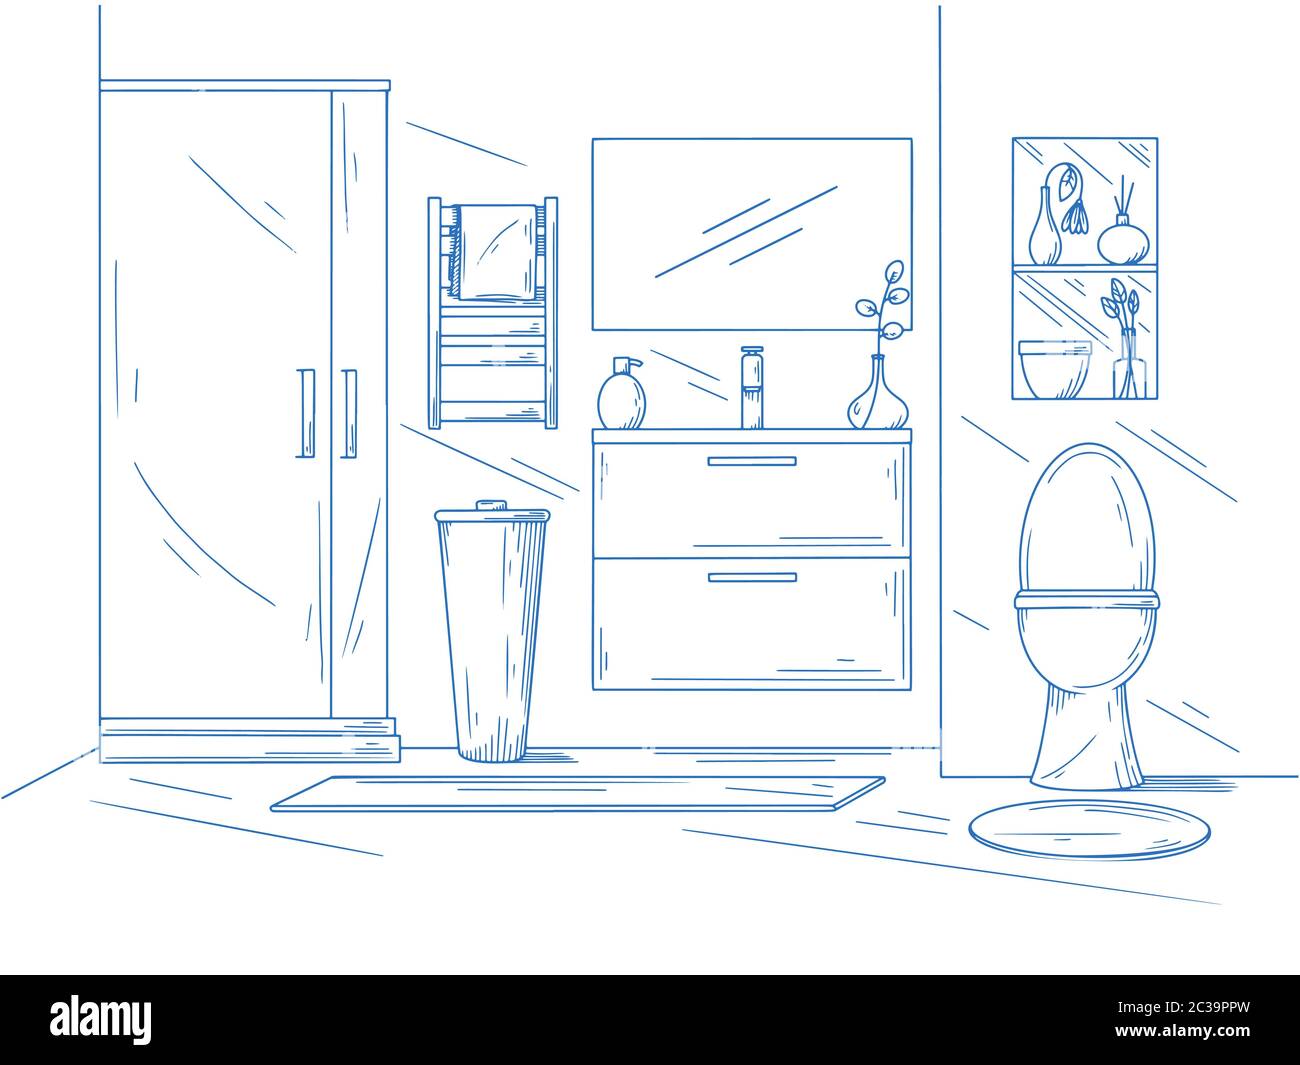 Vector illustration. Linear sketch of an bathroom interior. Interior  design. Modern bathroom furniture design with appliances and decors. Home  Interior Design Software Programs. Stock Vector | Adobe Stock